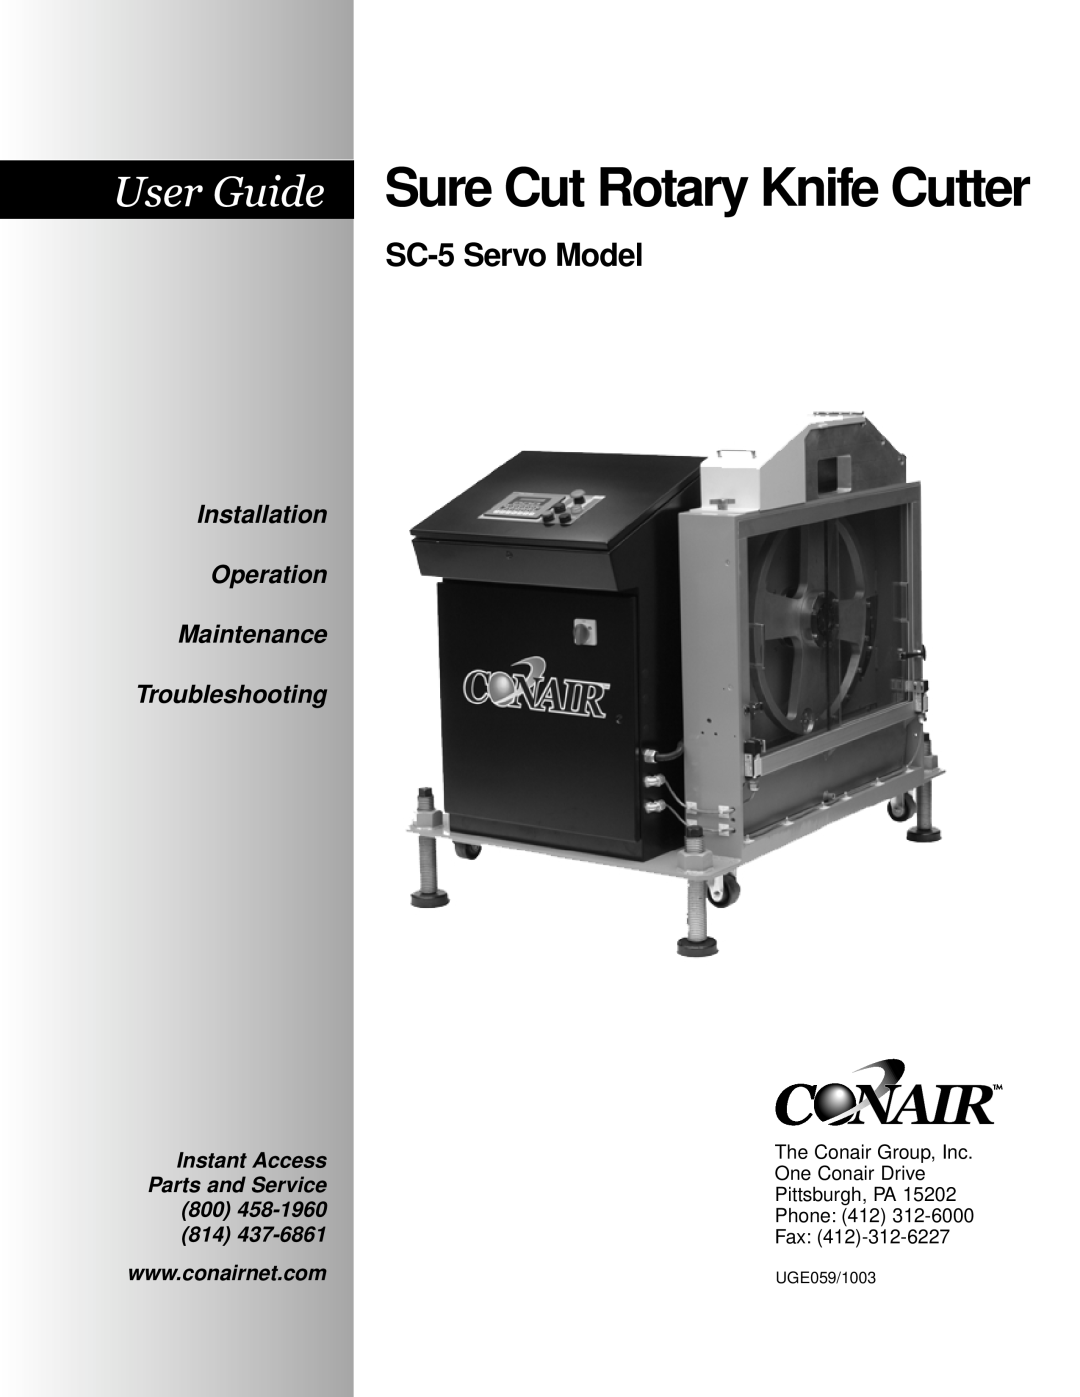 Conair manual SC-5 Servo Model, Sure Cut Rotary Knife Cutter, Installation Operation Maintenance Troubleshooting 